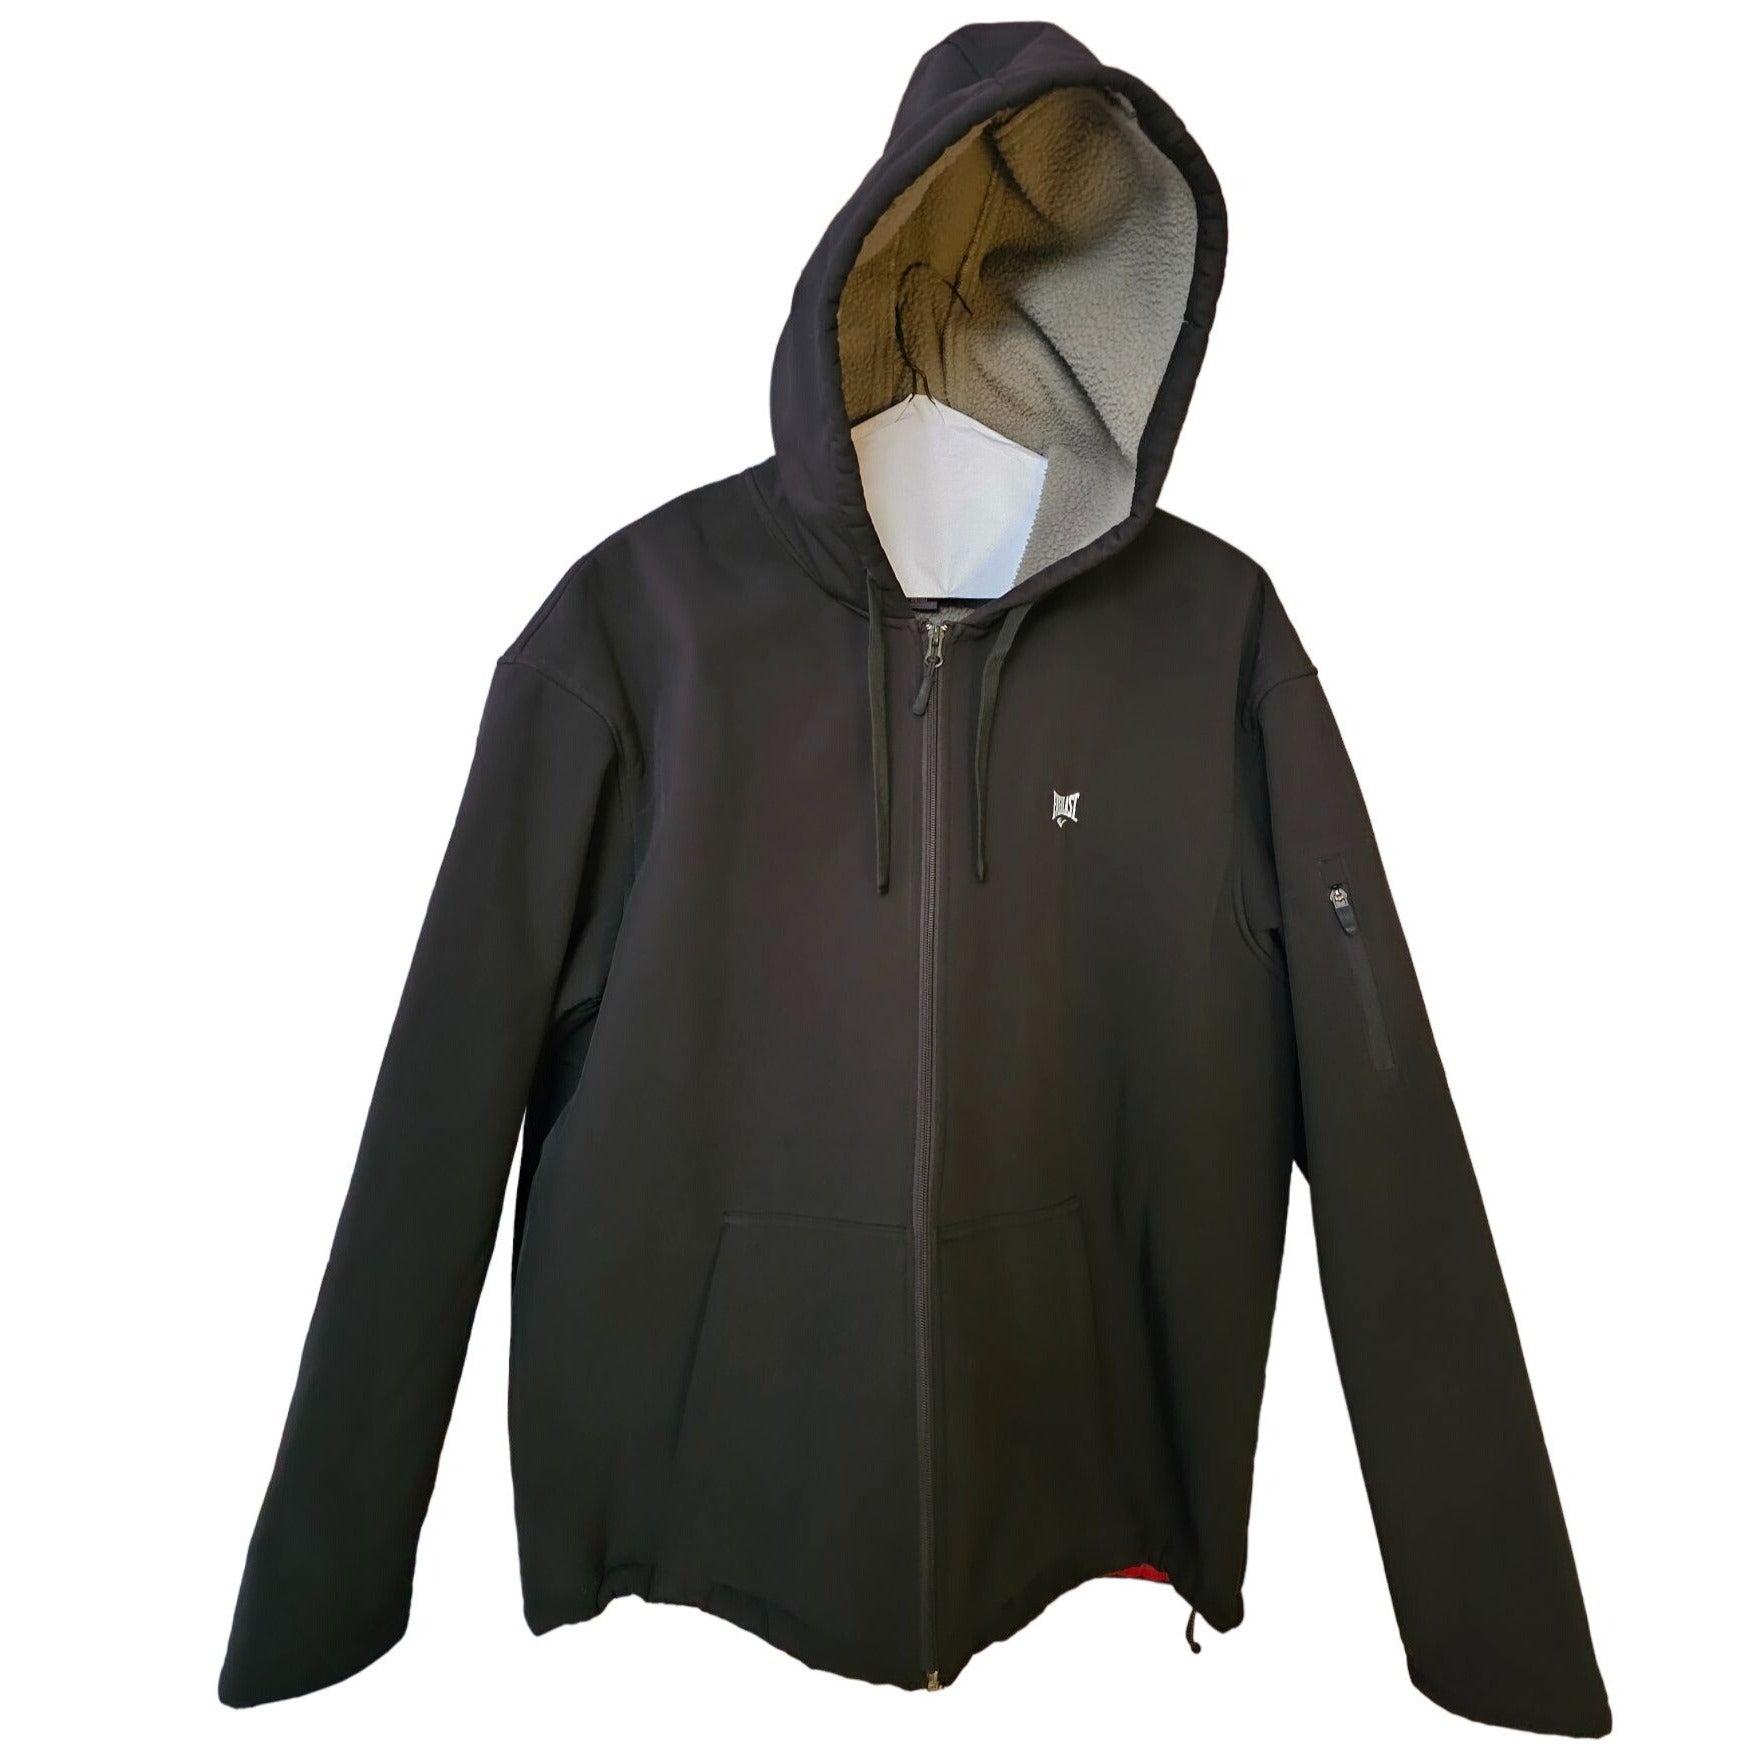 Everlast Full Zip Active Wear Black Sherpa Lined Men's Jacket 2XL (RUNS SMALL)